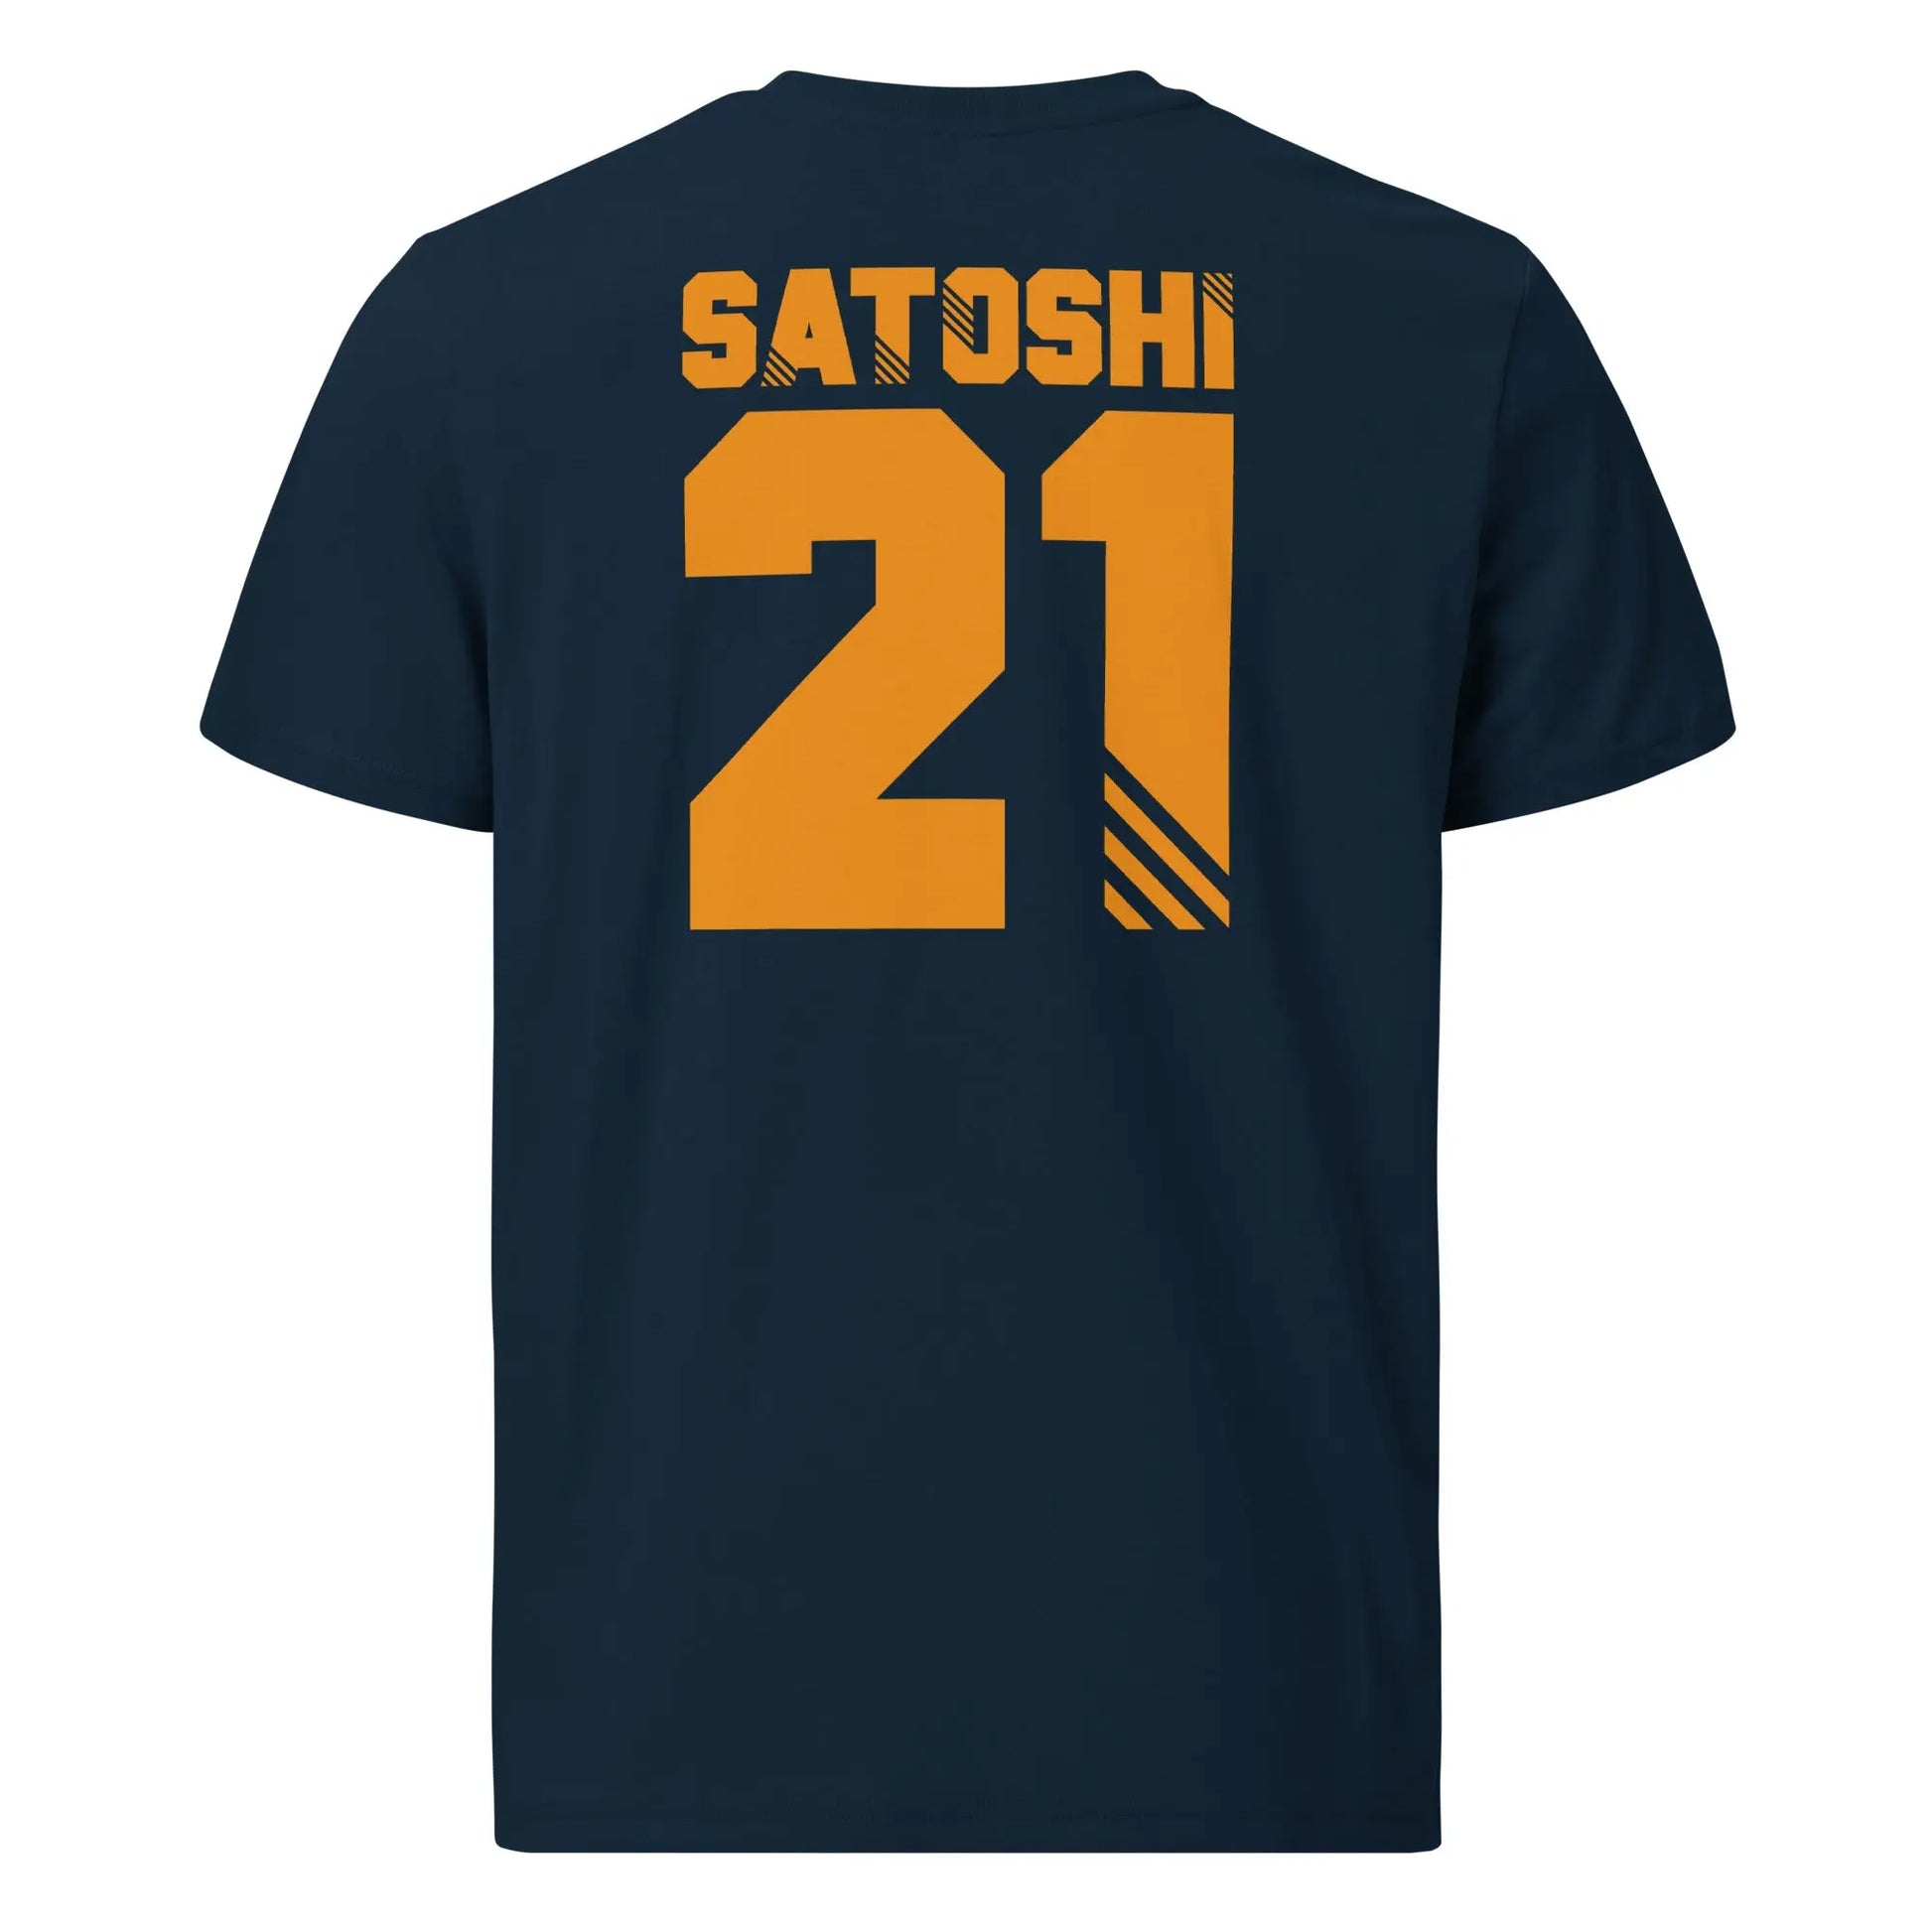 Satoshi 21 - Premium Unisex Organic Cotton Bitcoin T-shirt - Back Print Navy Blue Color